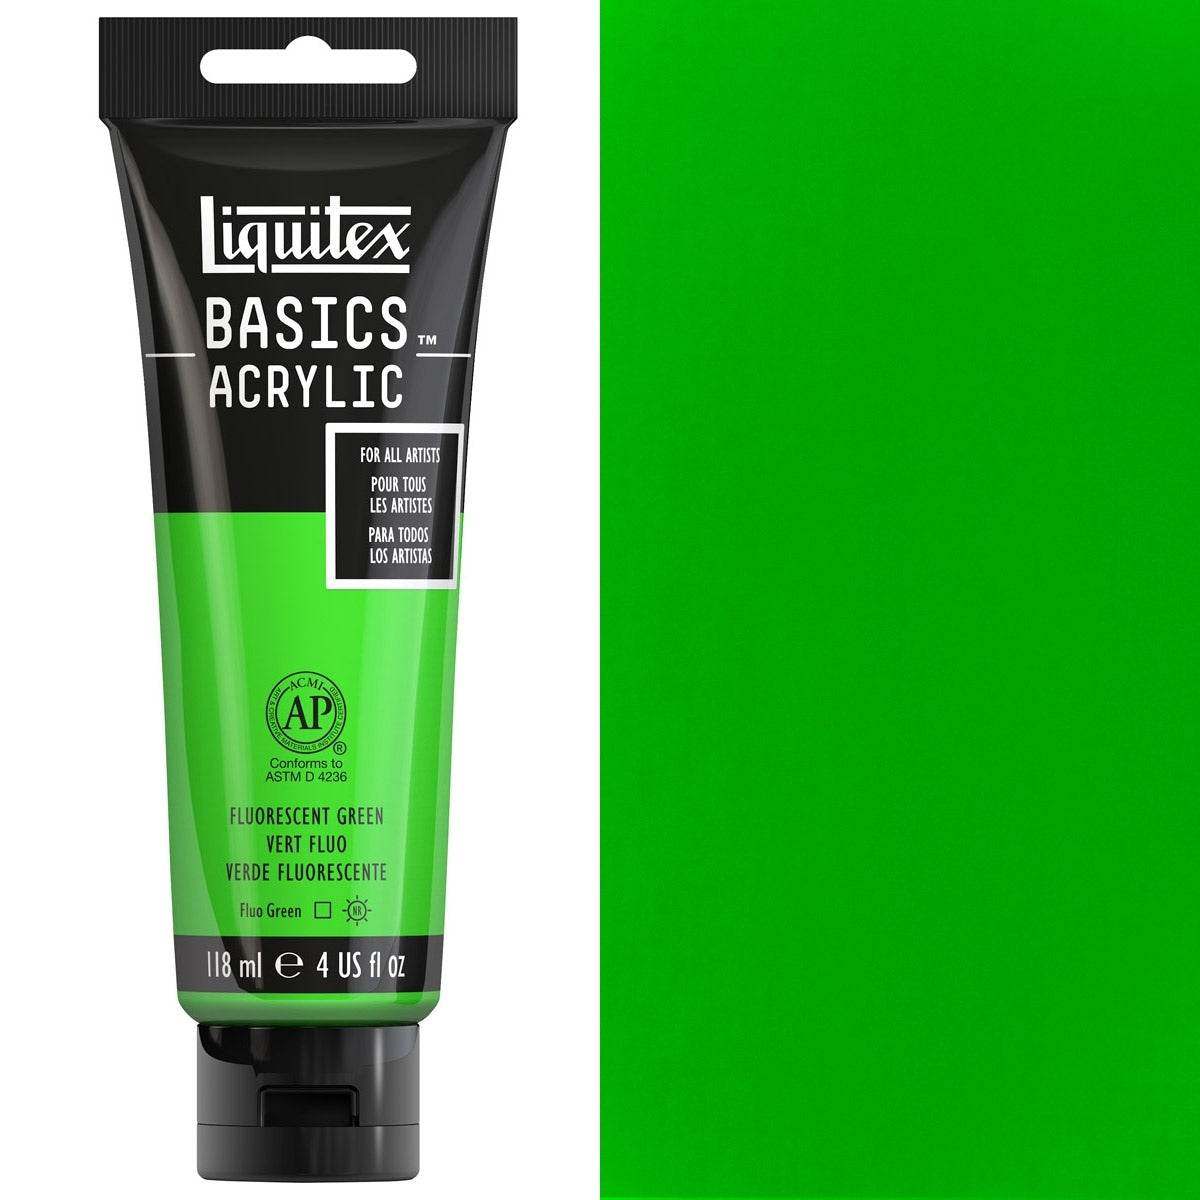 Liquitex - Basics Acrylic Colour - 118ml - Fluorescent Green